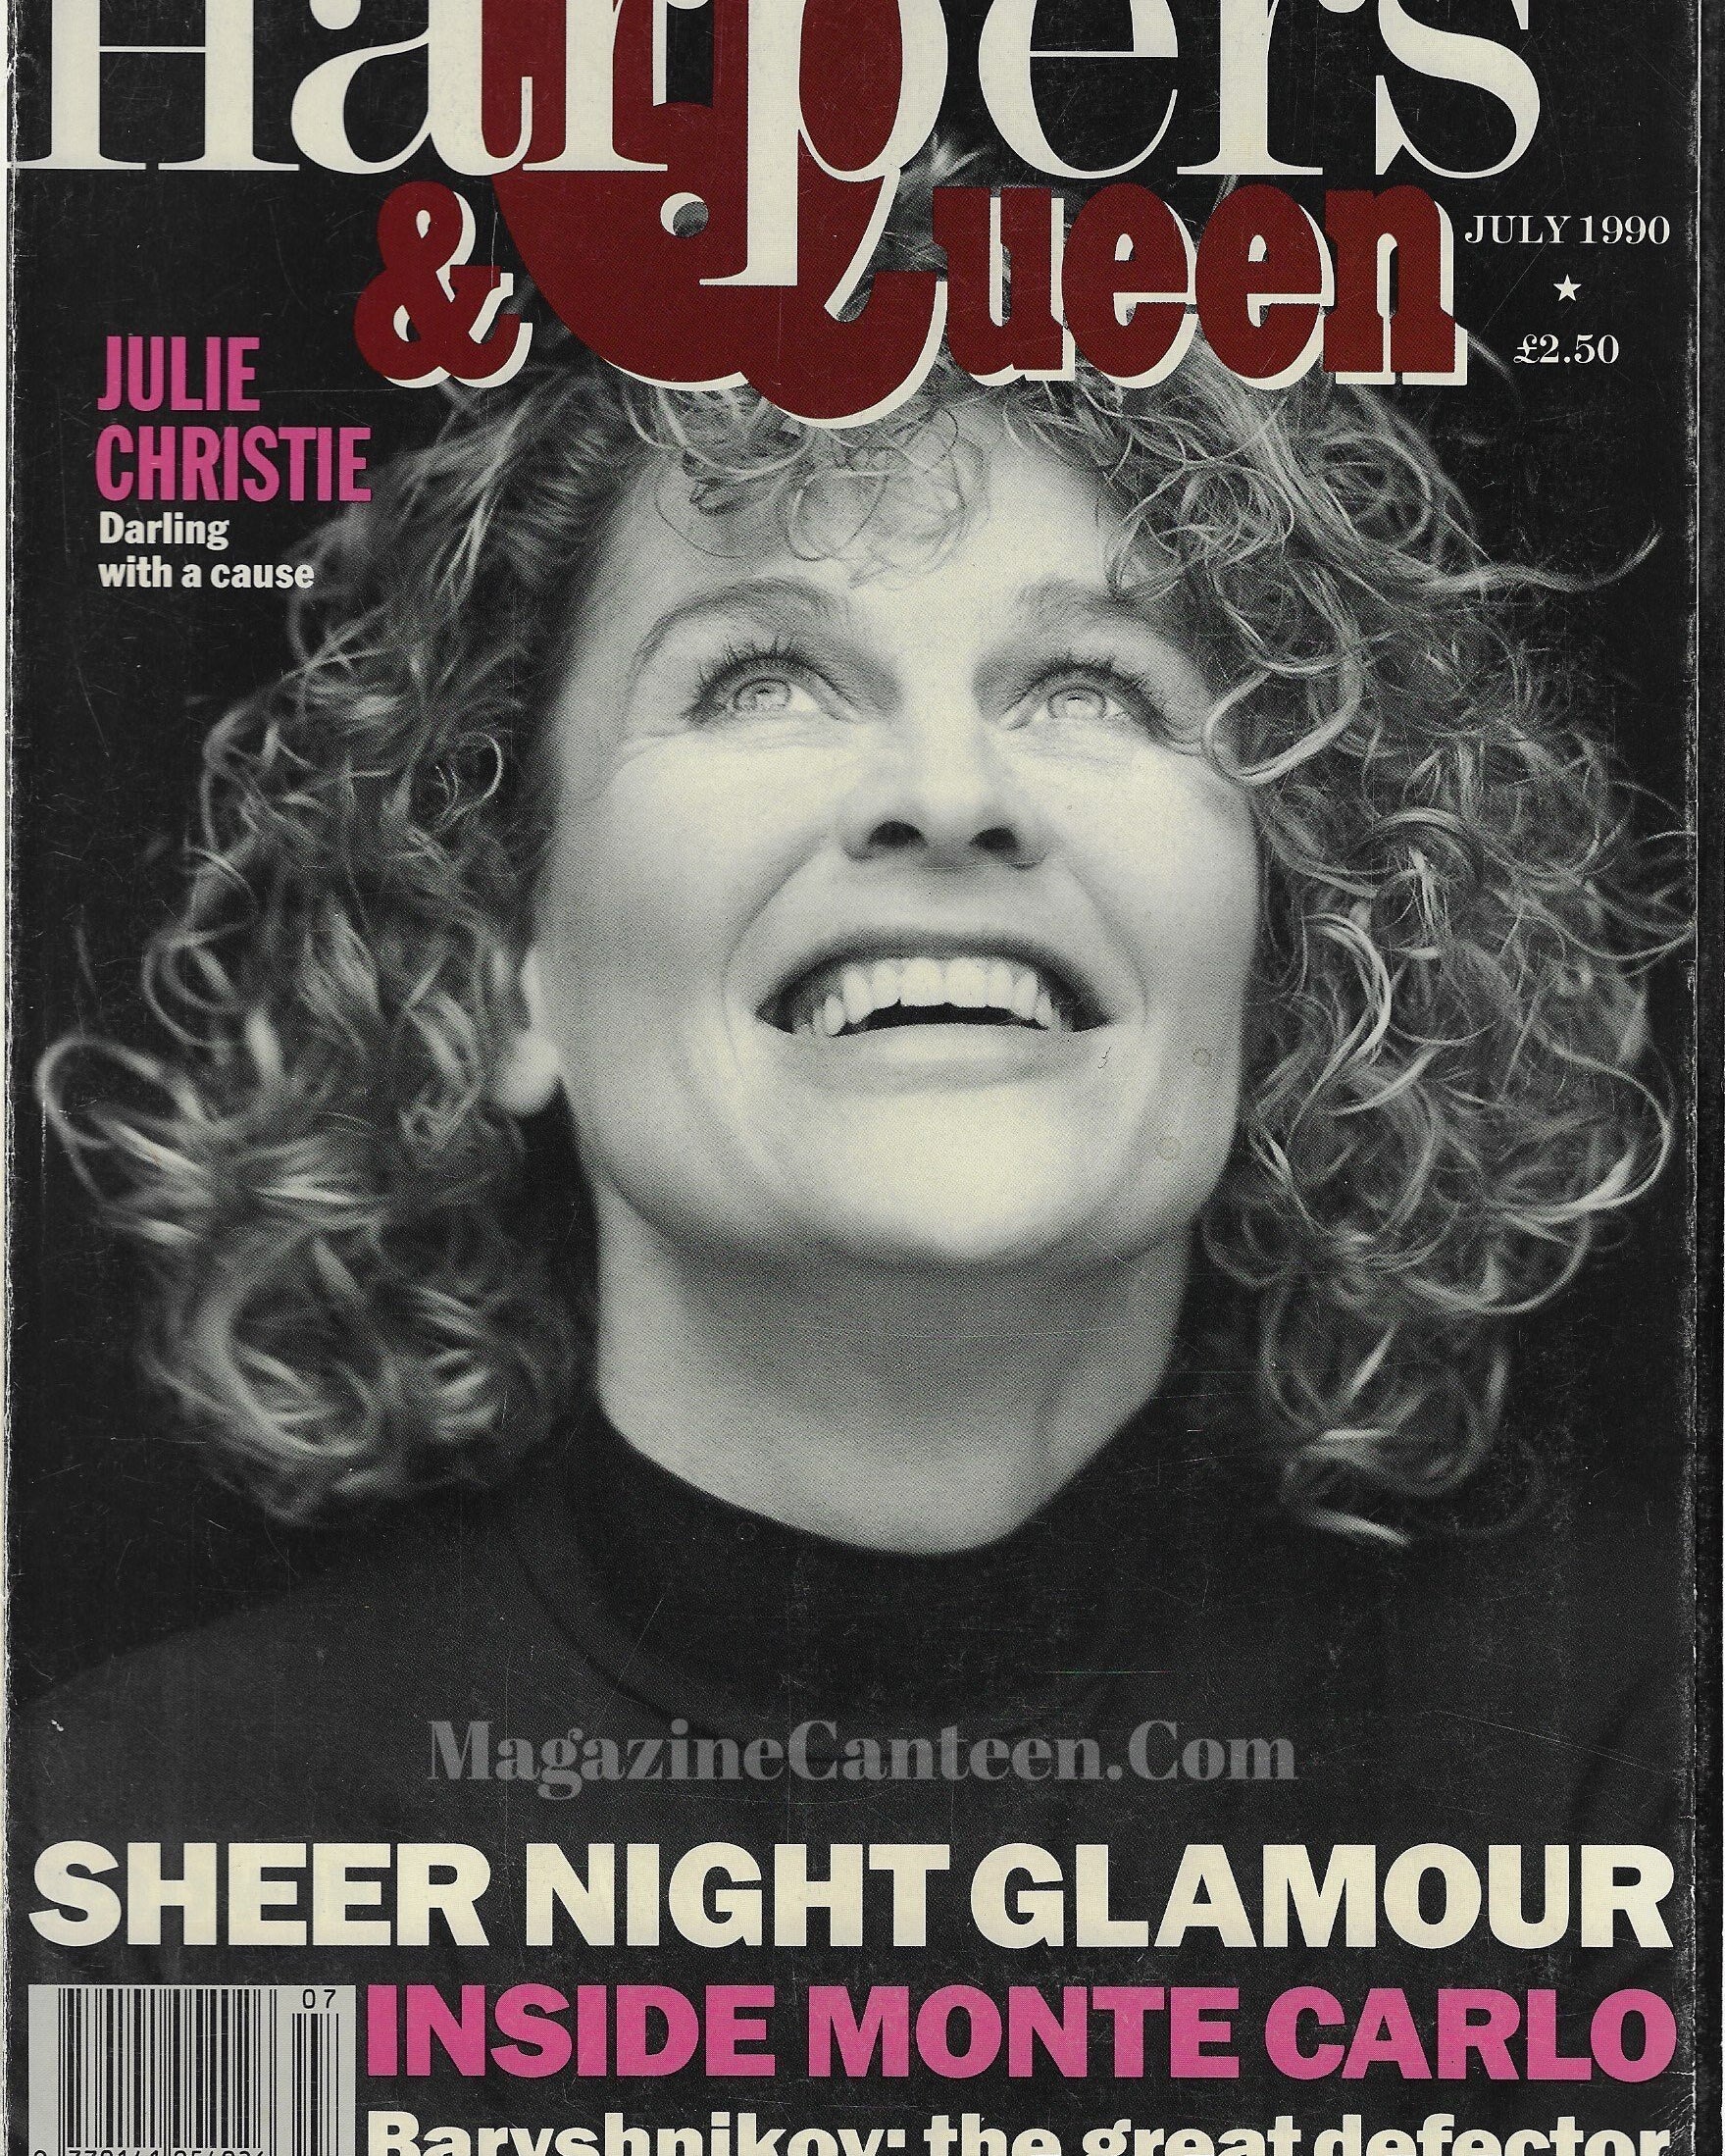 Harpers & Queen Magazine - Julia Christie